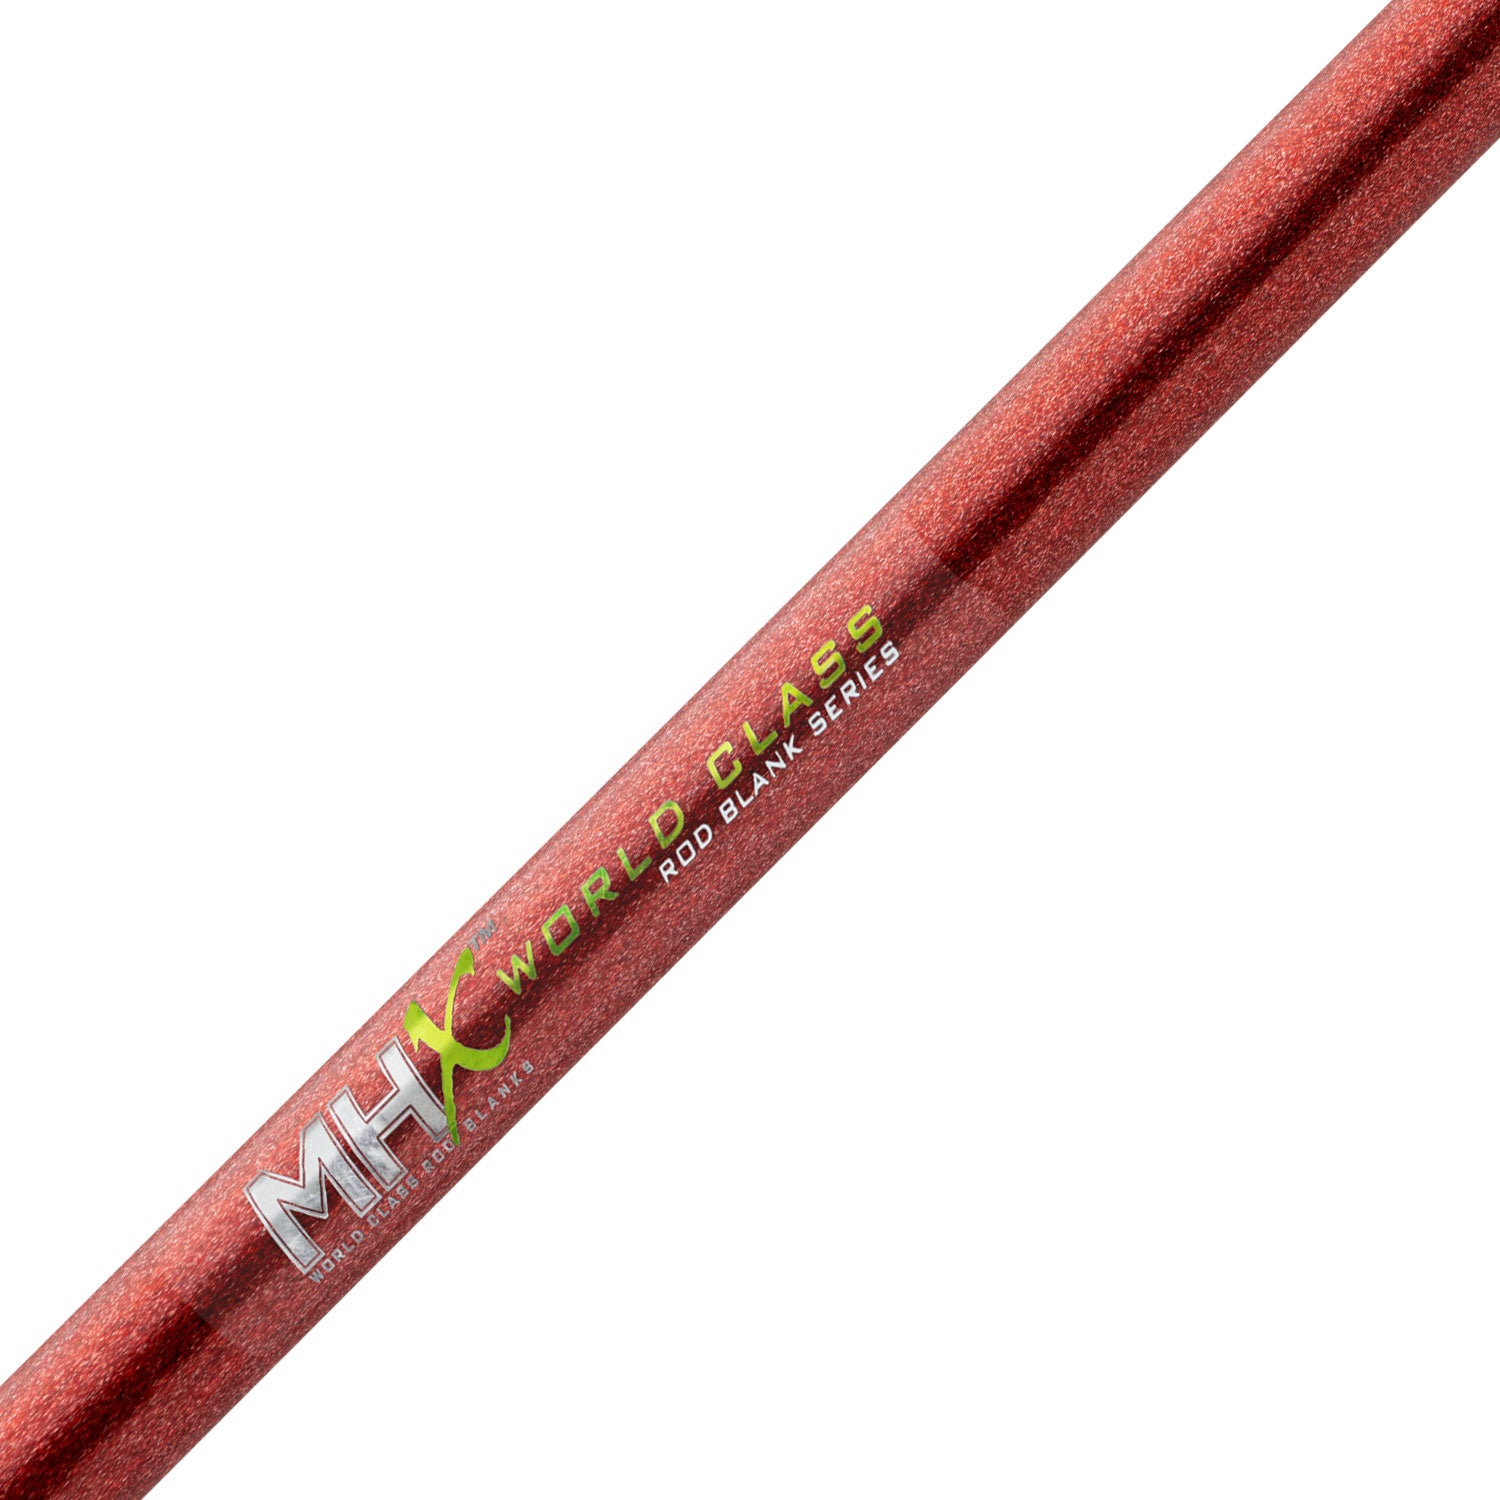 MHX 7'0" Medium Light Saltwater Rod Blank - L843